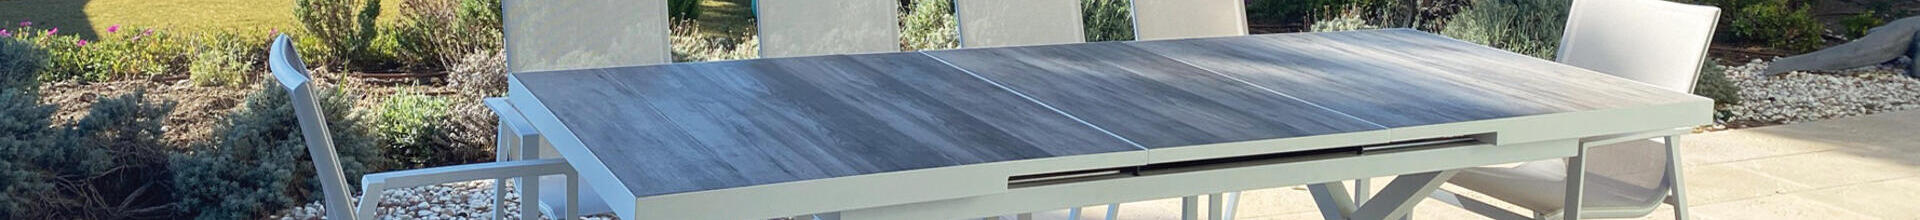 Athens White Aluminium 200/260 x 100 x 75cm Extendable Dining Table (6-10)